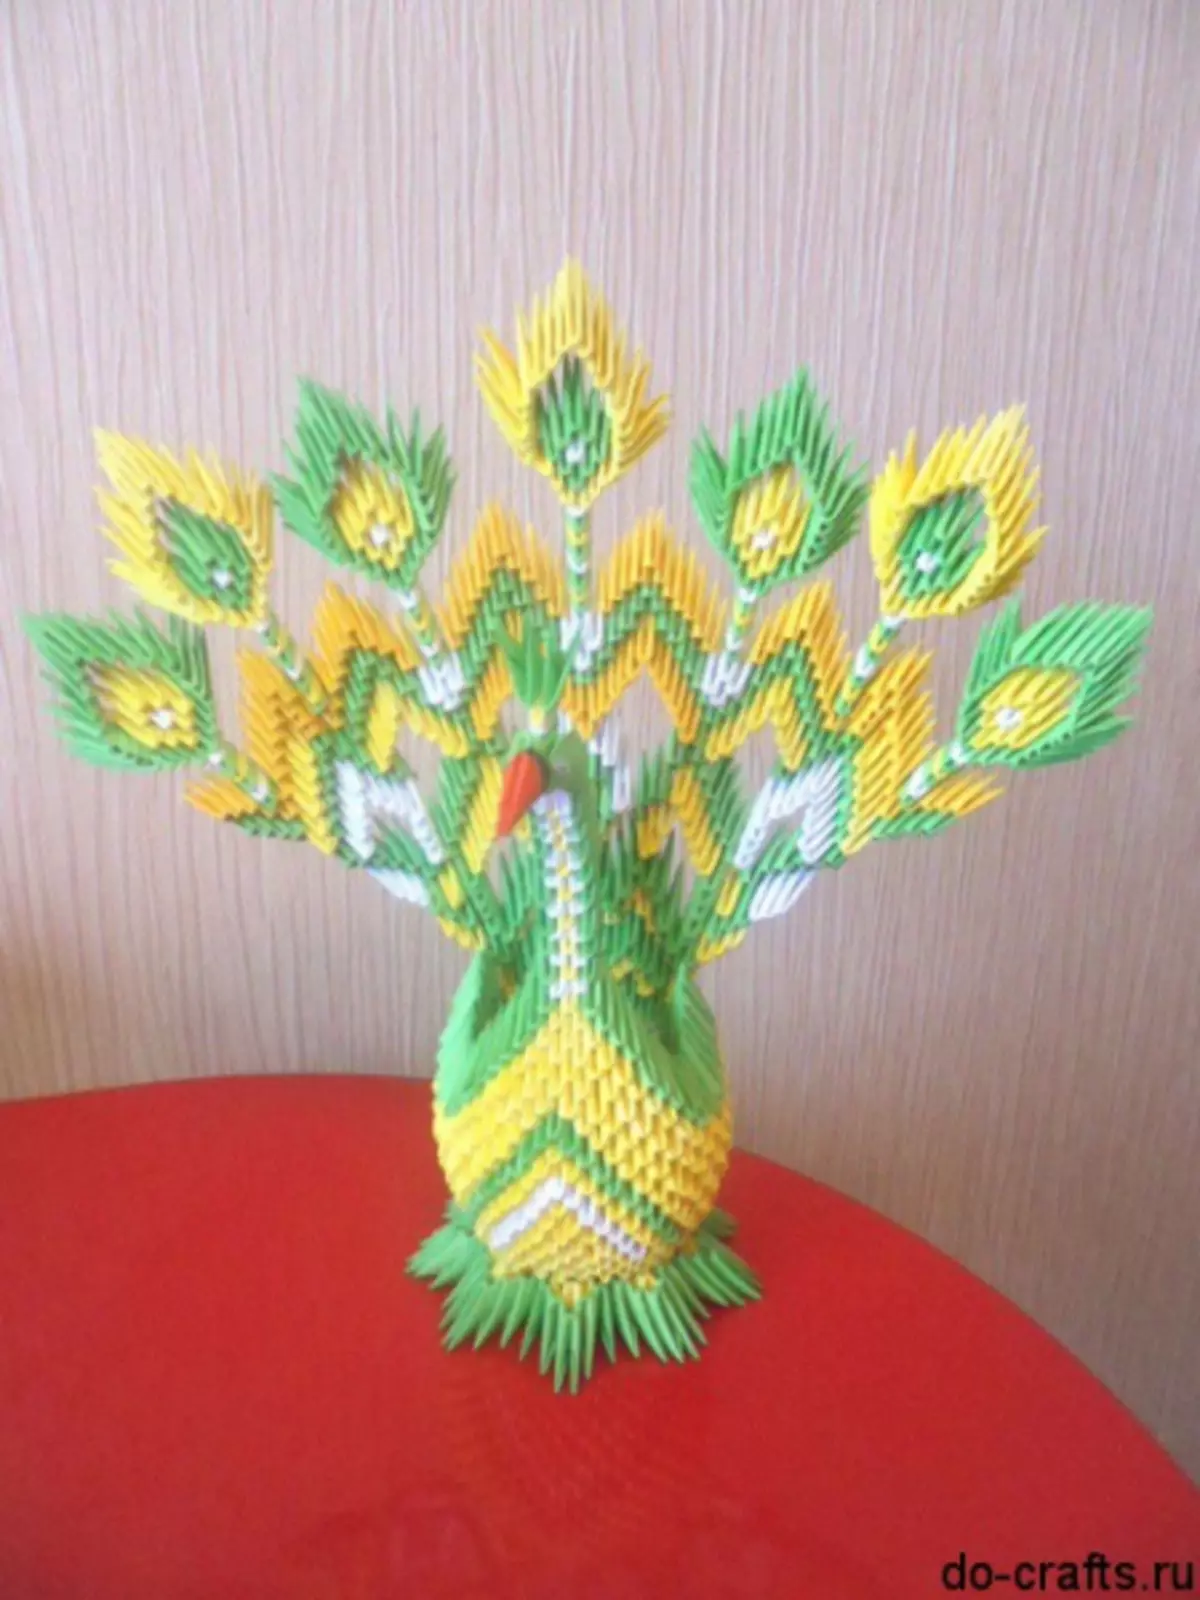 Modularni origami: paun, master klasa sa skupštinom i videozapisom